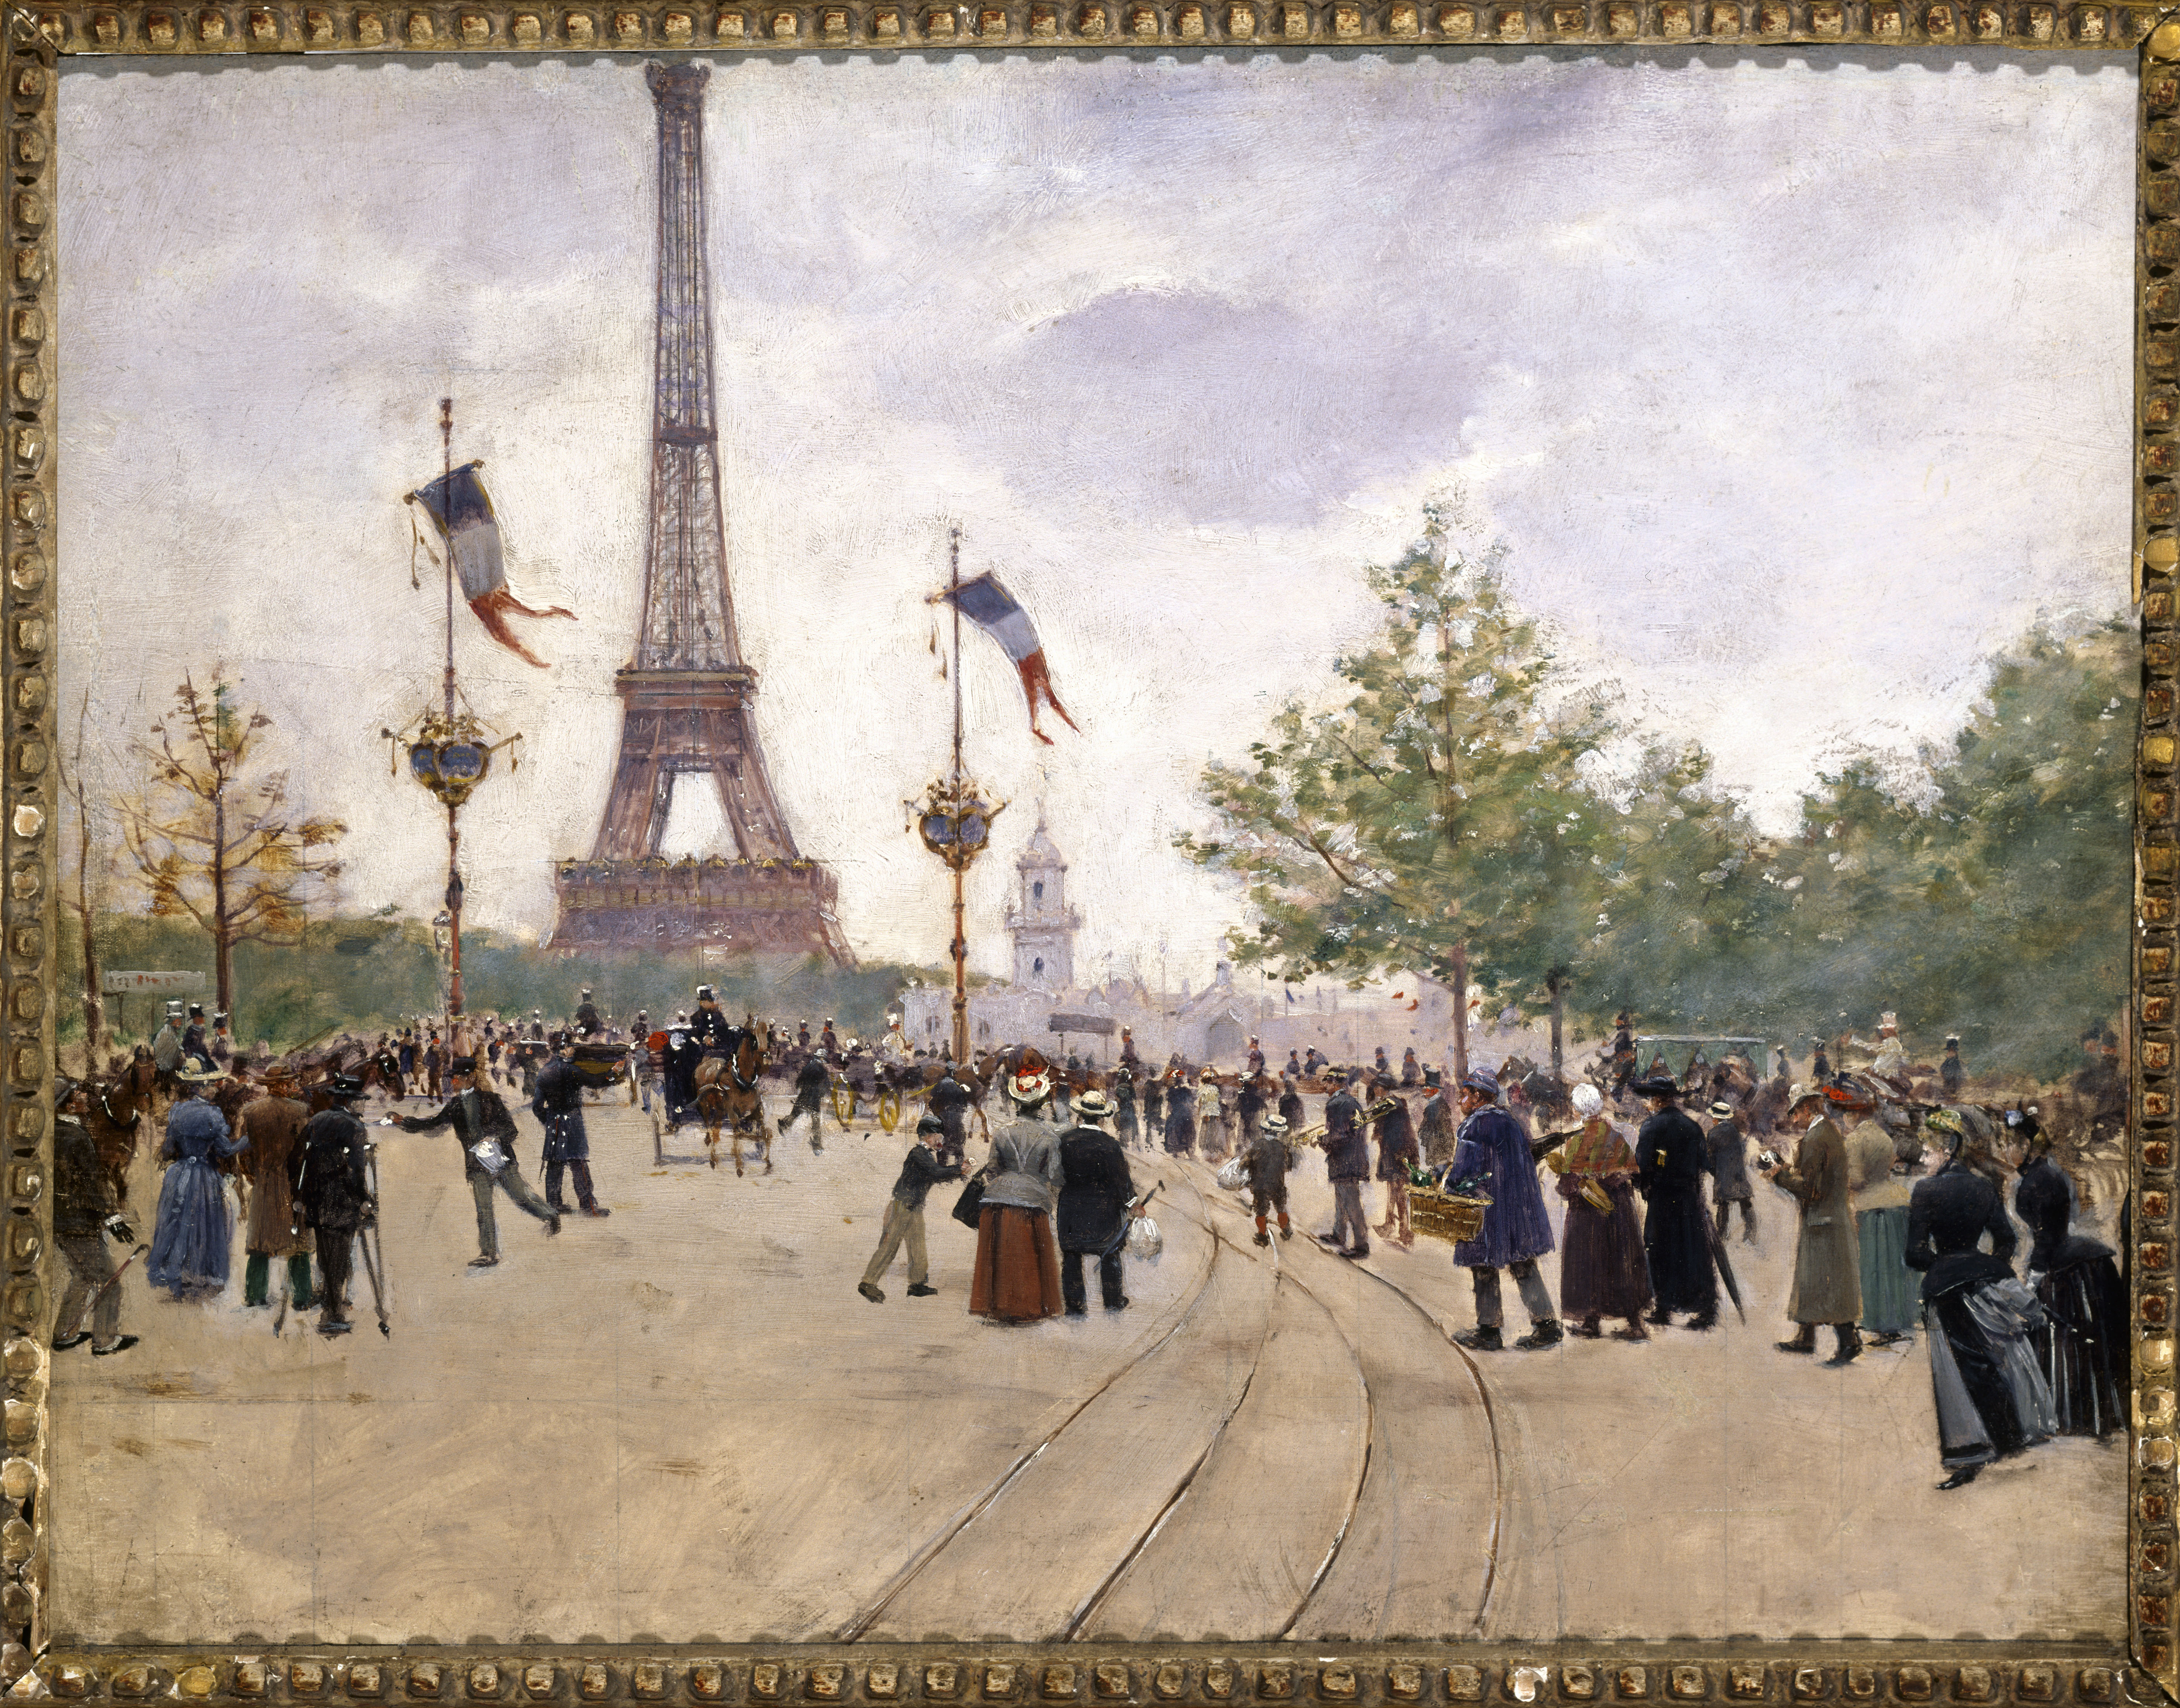 Картины конца 18 века. Эйфелева башня в Париже 1889 год.